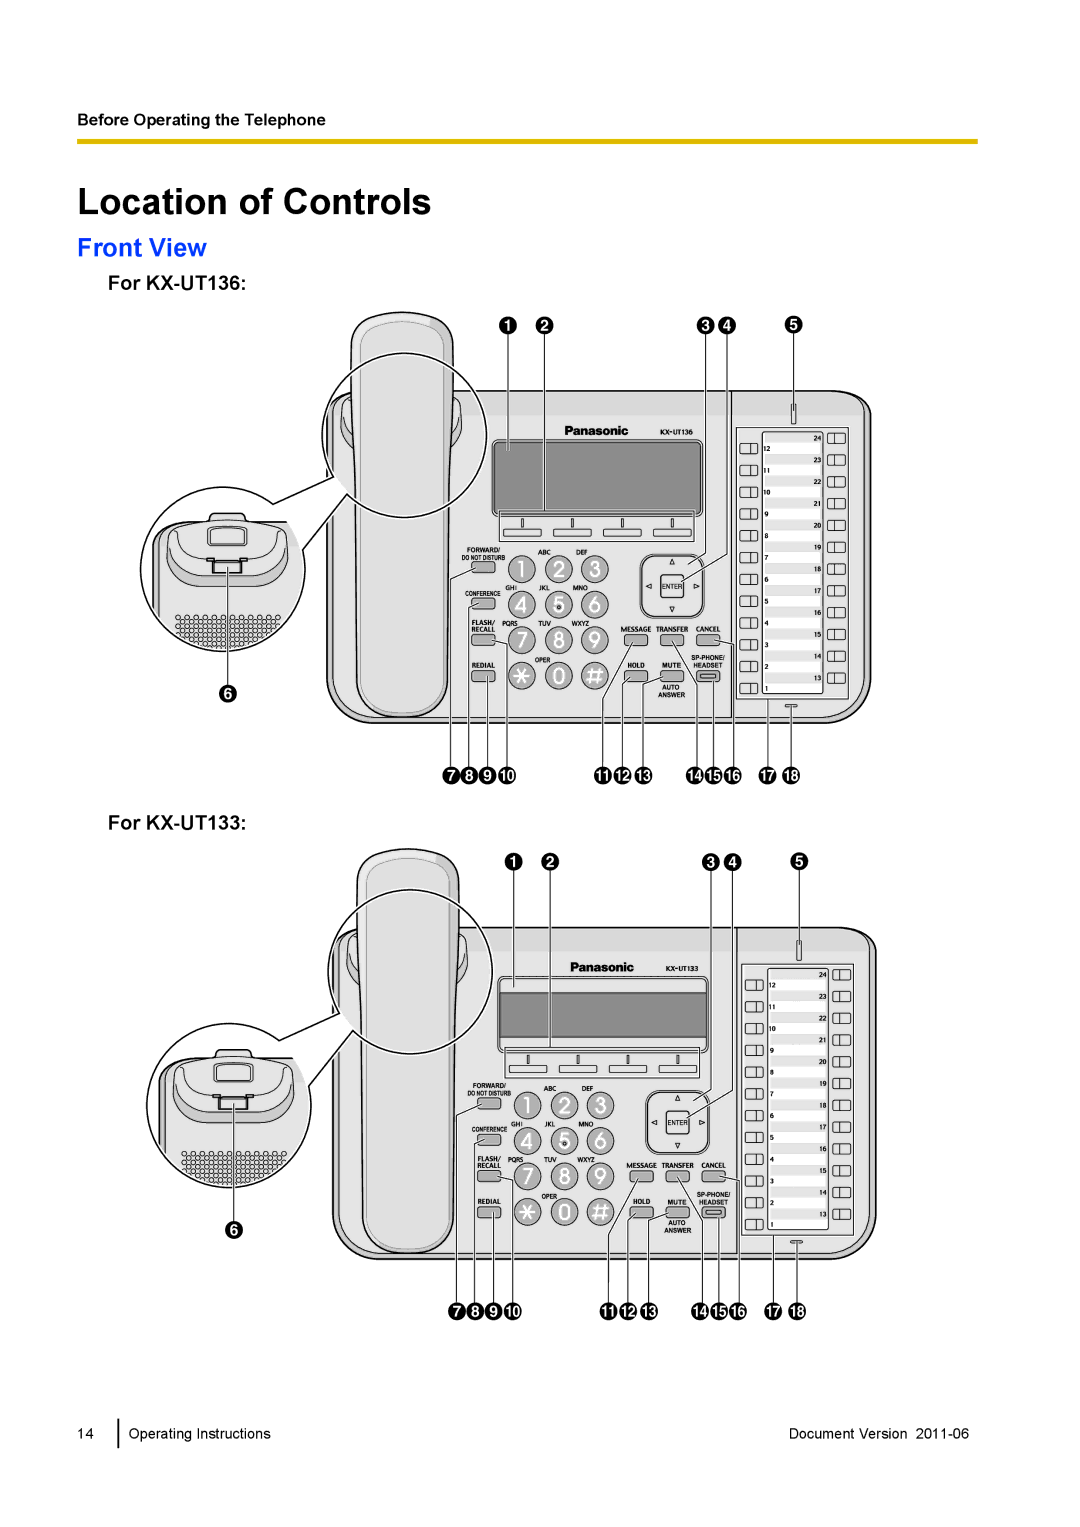 Panasonic KX-UT113, KX-UT123 manual Location of Controls, Front View, For KX-UT136, For KX-UT133 